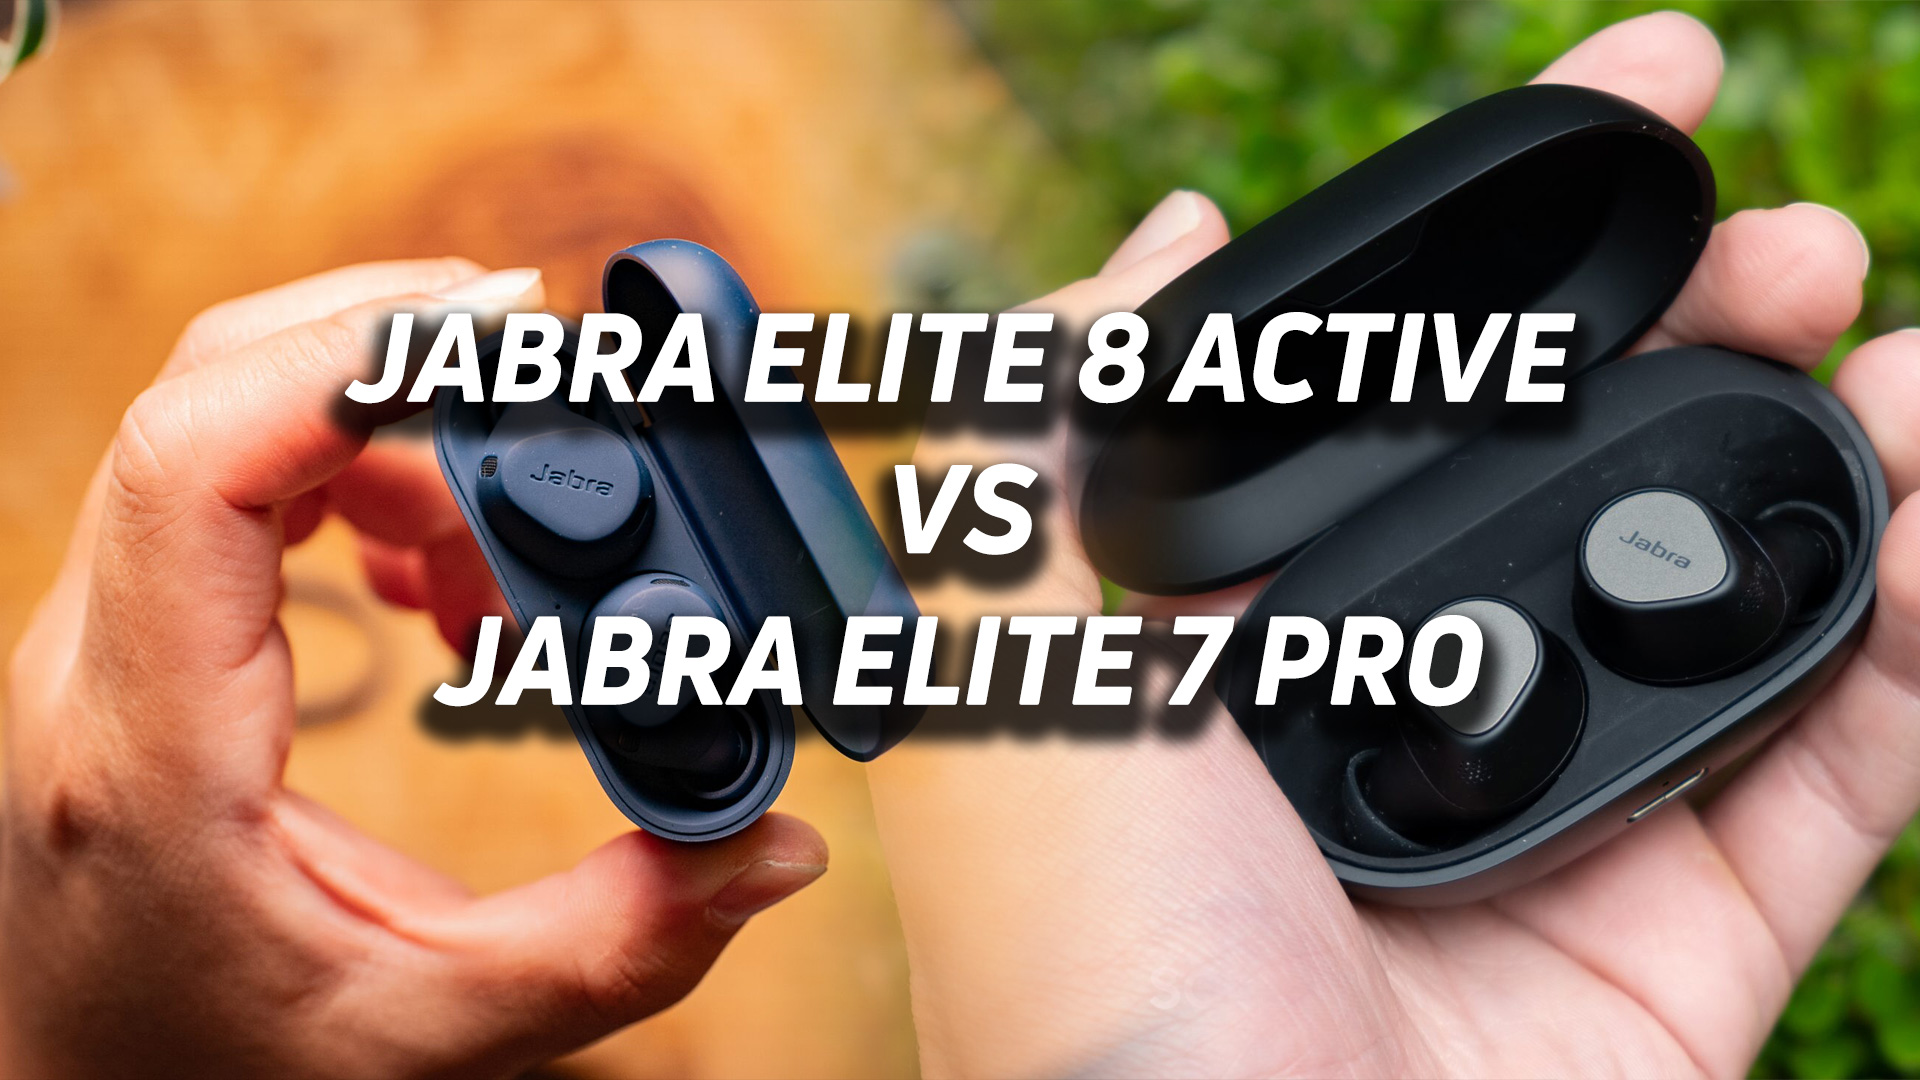 Jabra Elite 8 Active vs Jabra Elite 7 Pro text on photos of the two products.